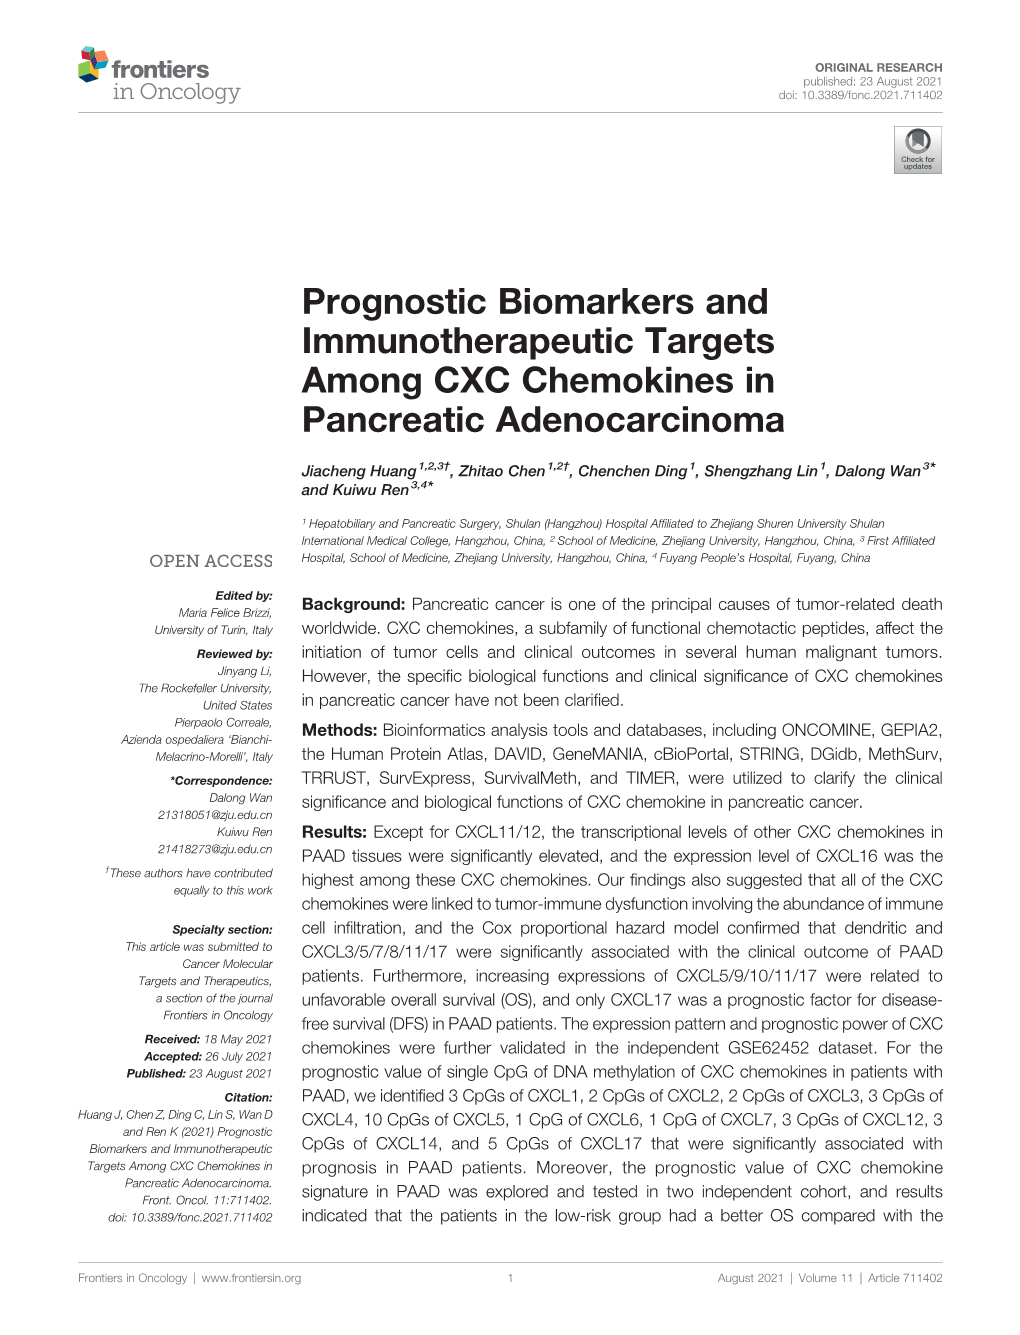 Prognostic Biomarkers and Immunotherapeutic Targets Among CXC Chemokines in Pancreatic Adenocarcinoma